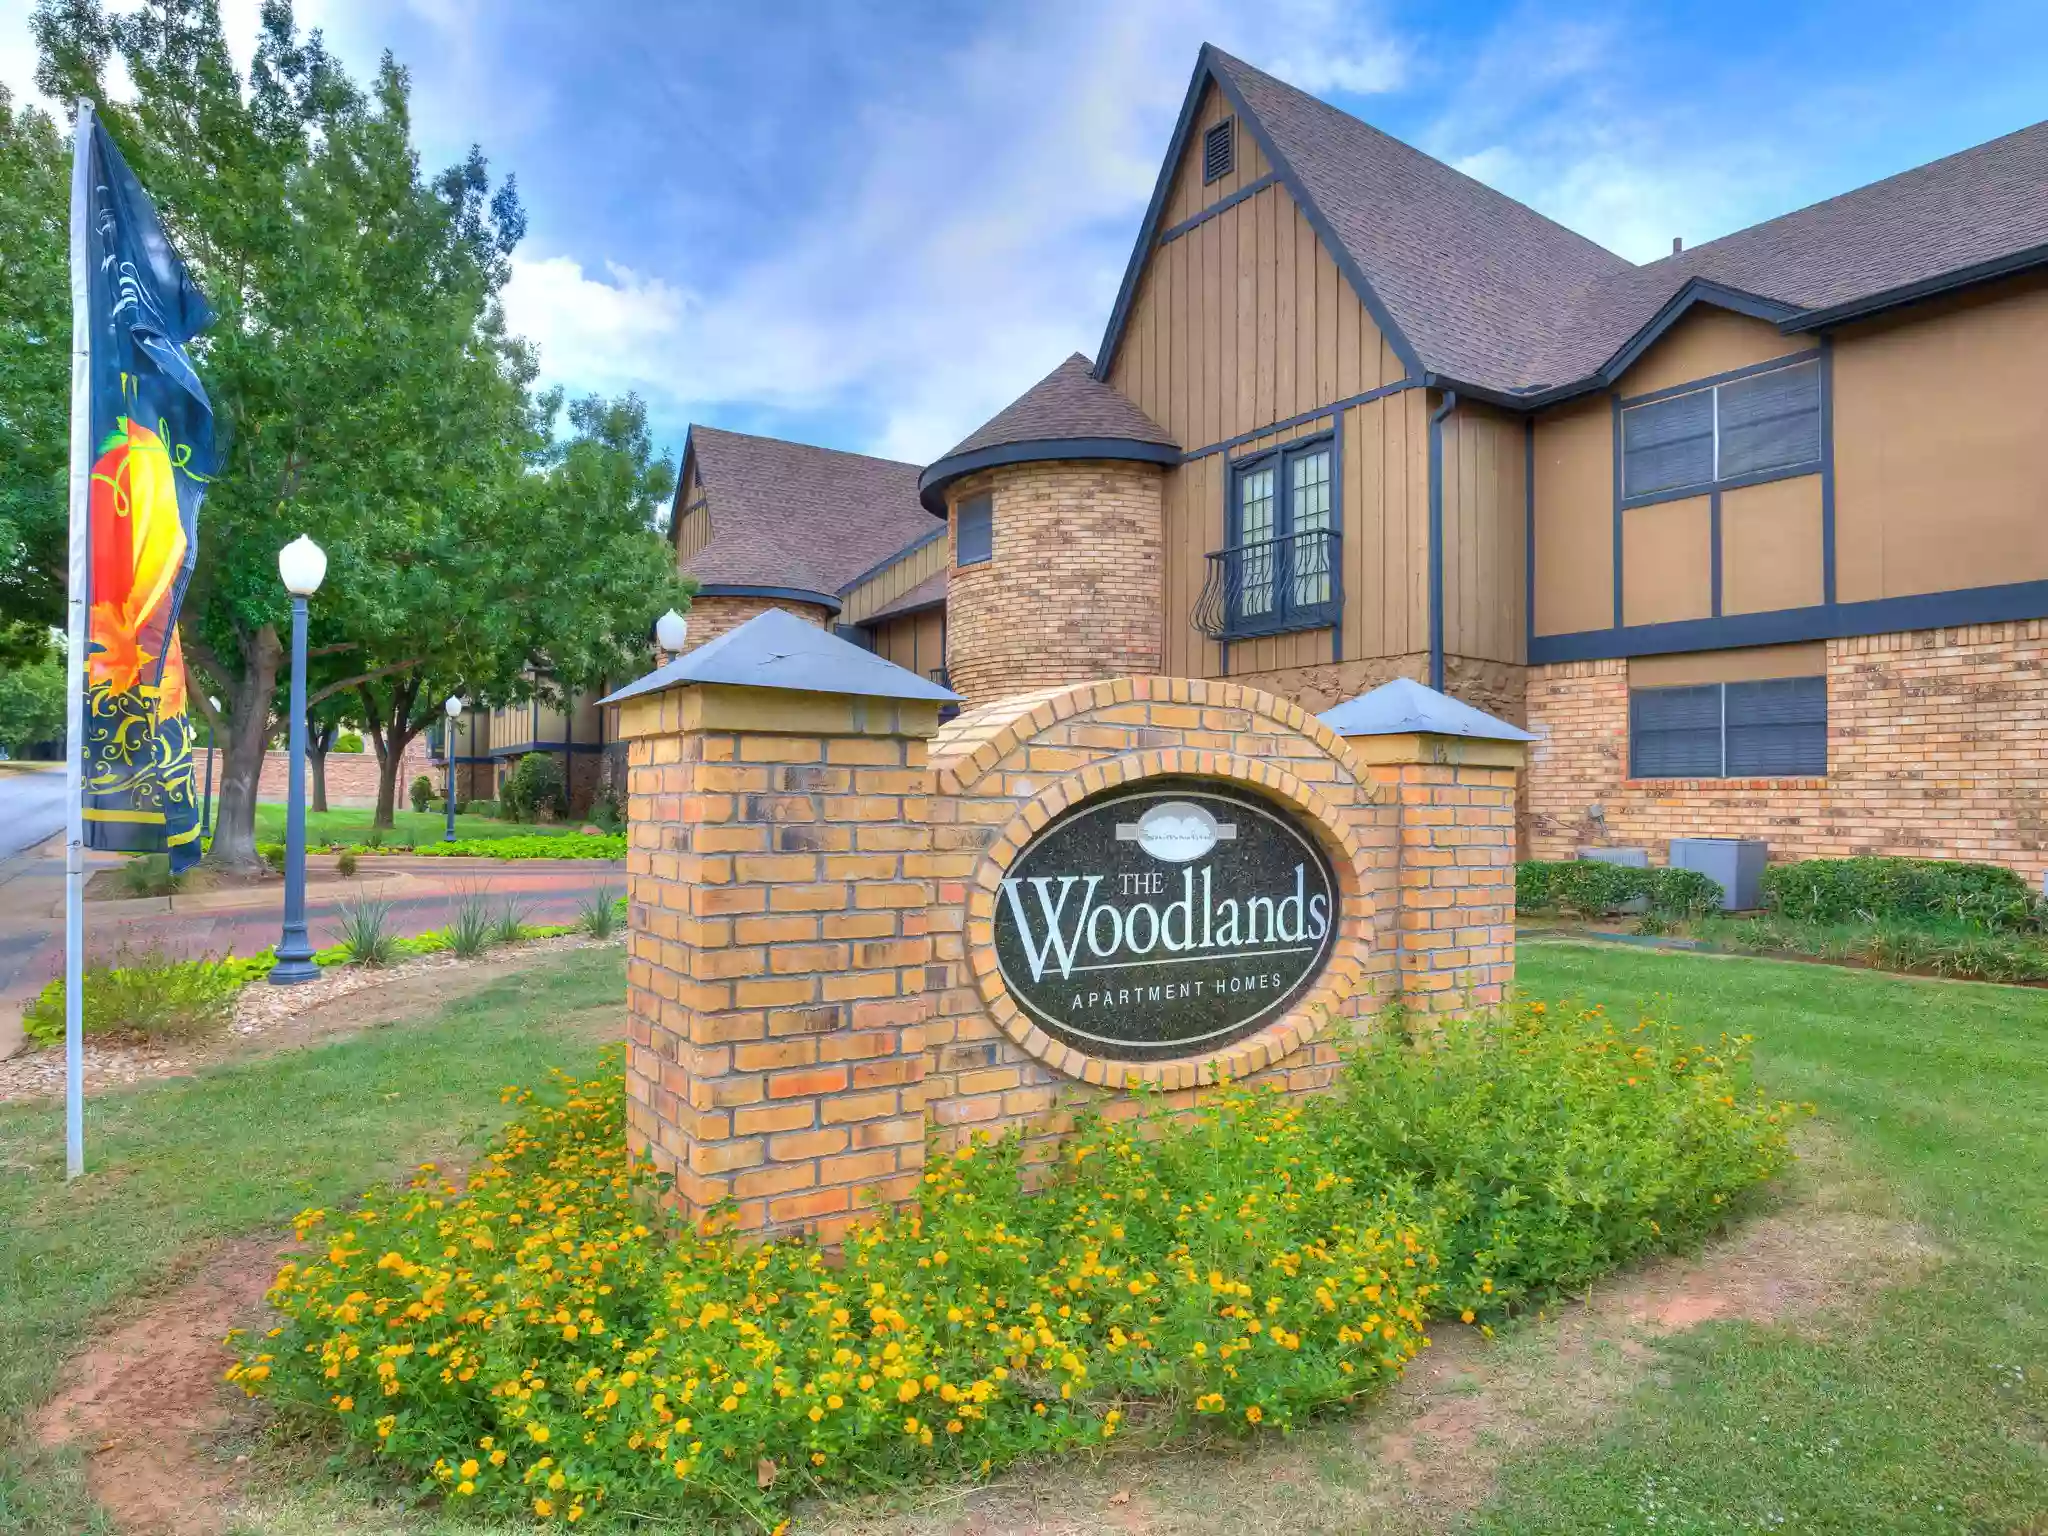 Woodlands Apartment Homes